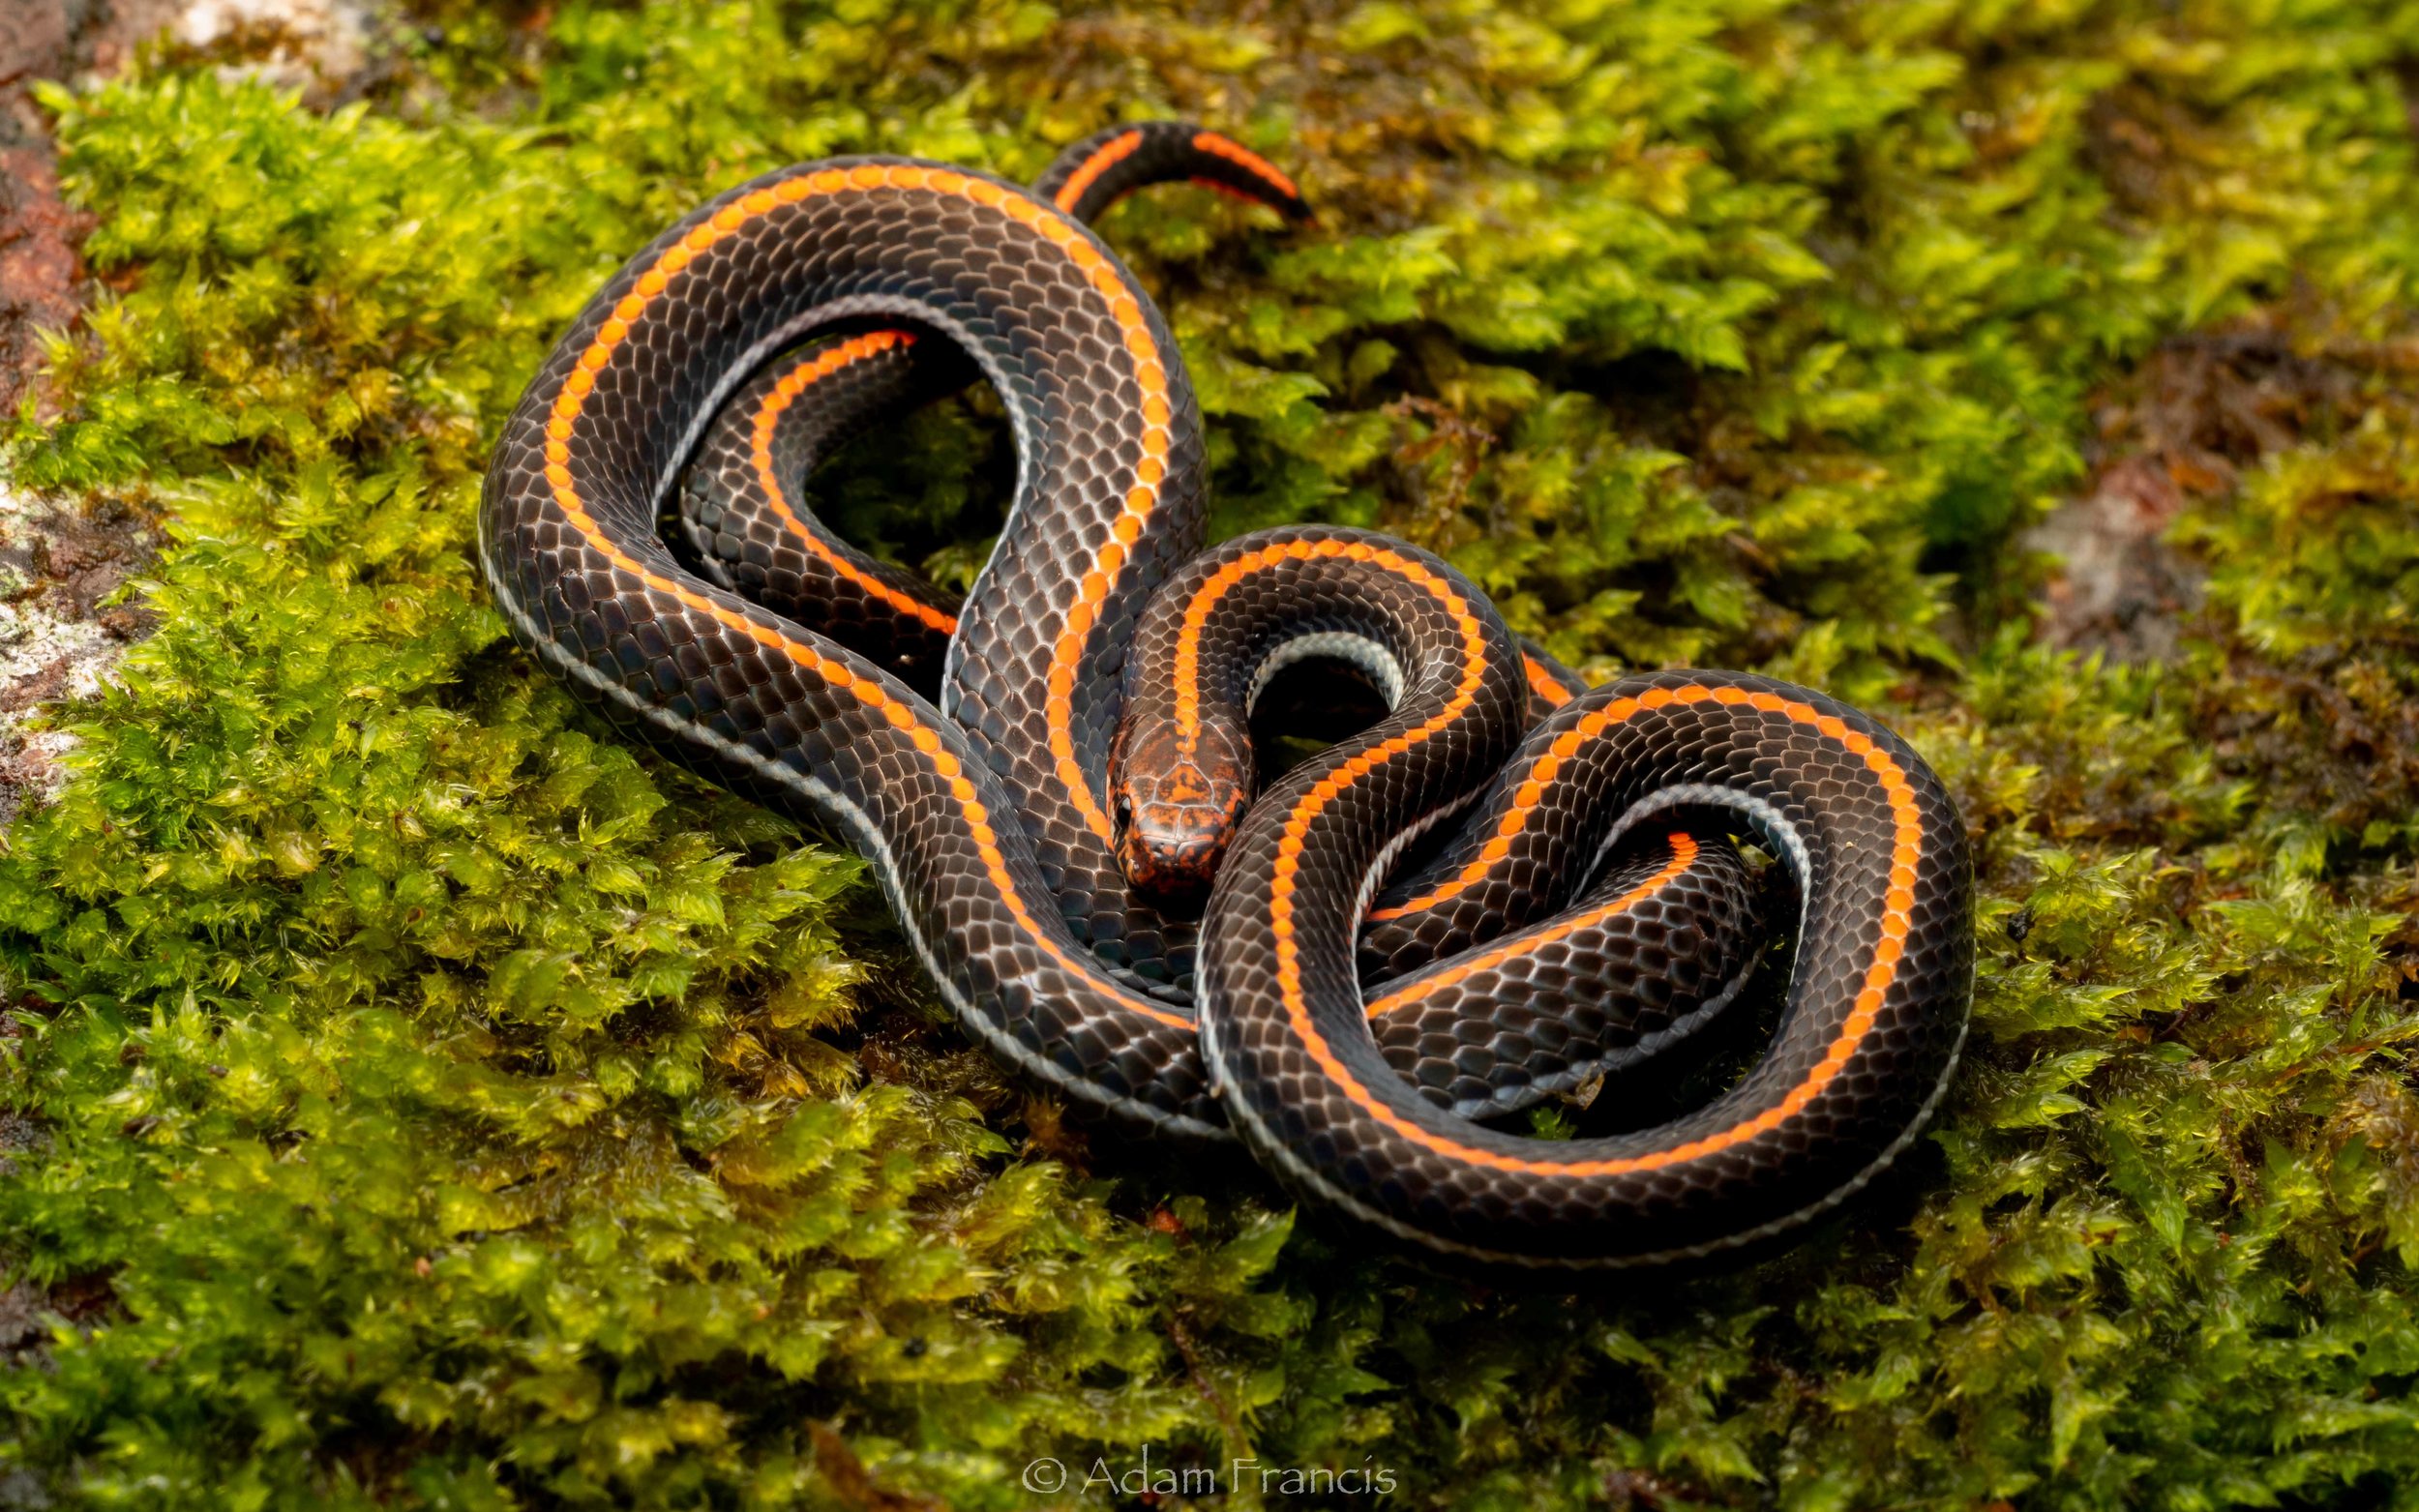 Malaysian Striped Coral Snake - Calliophis intestinalis